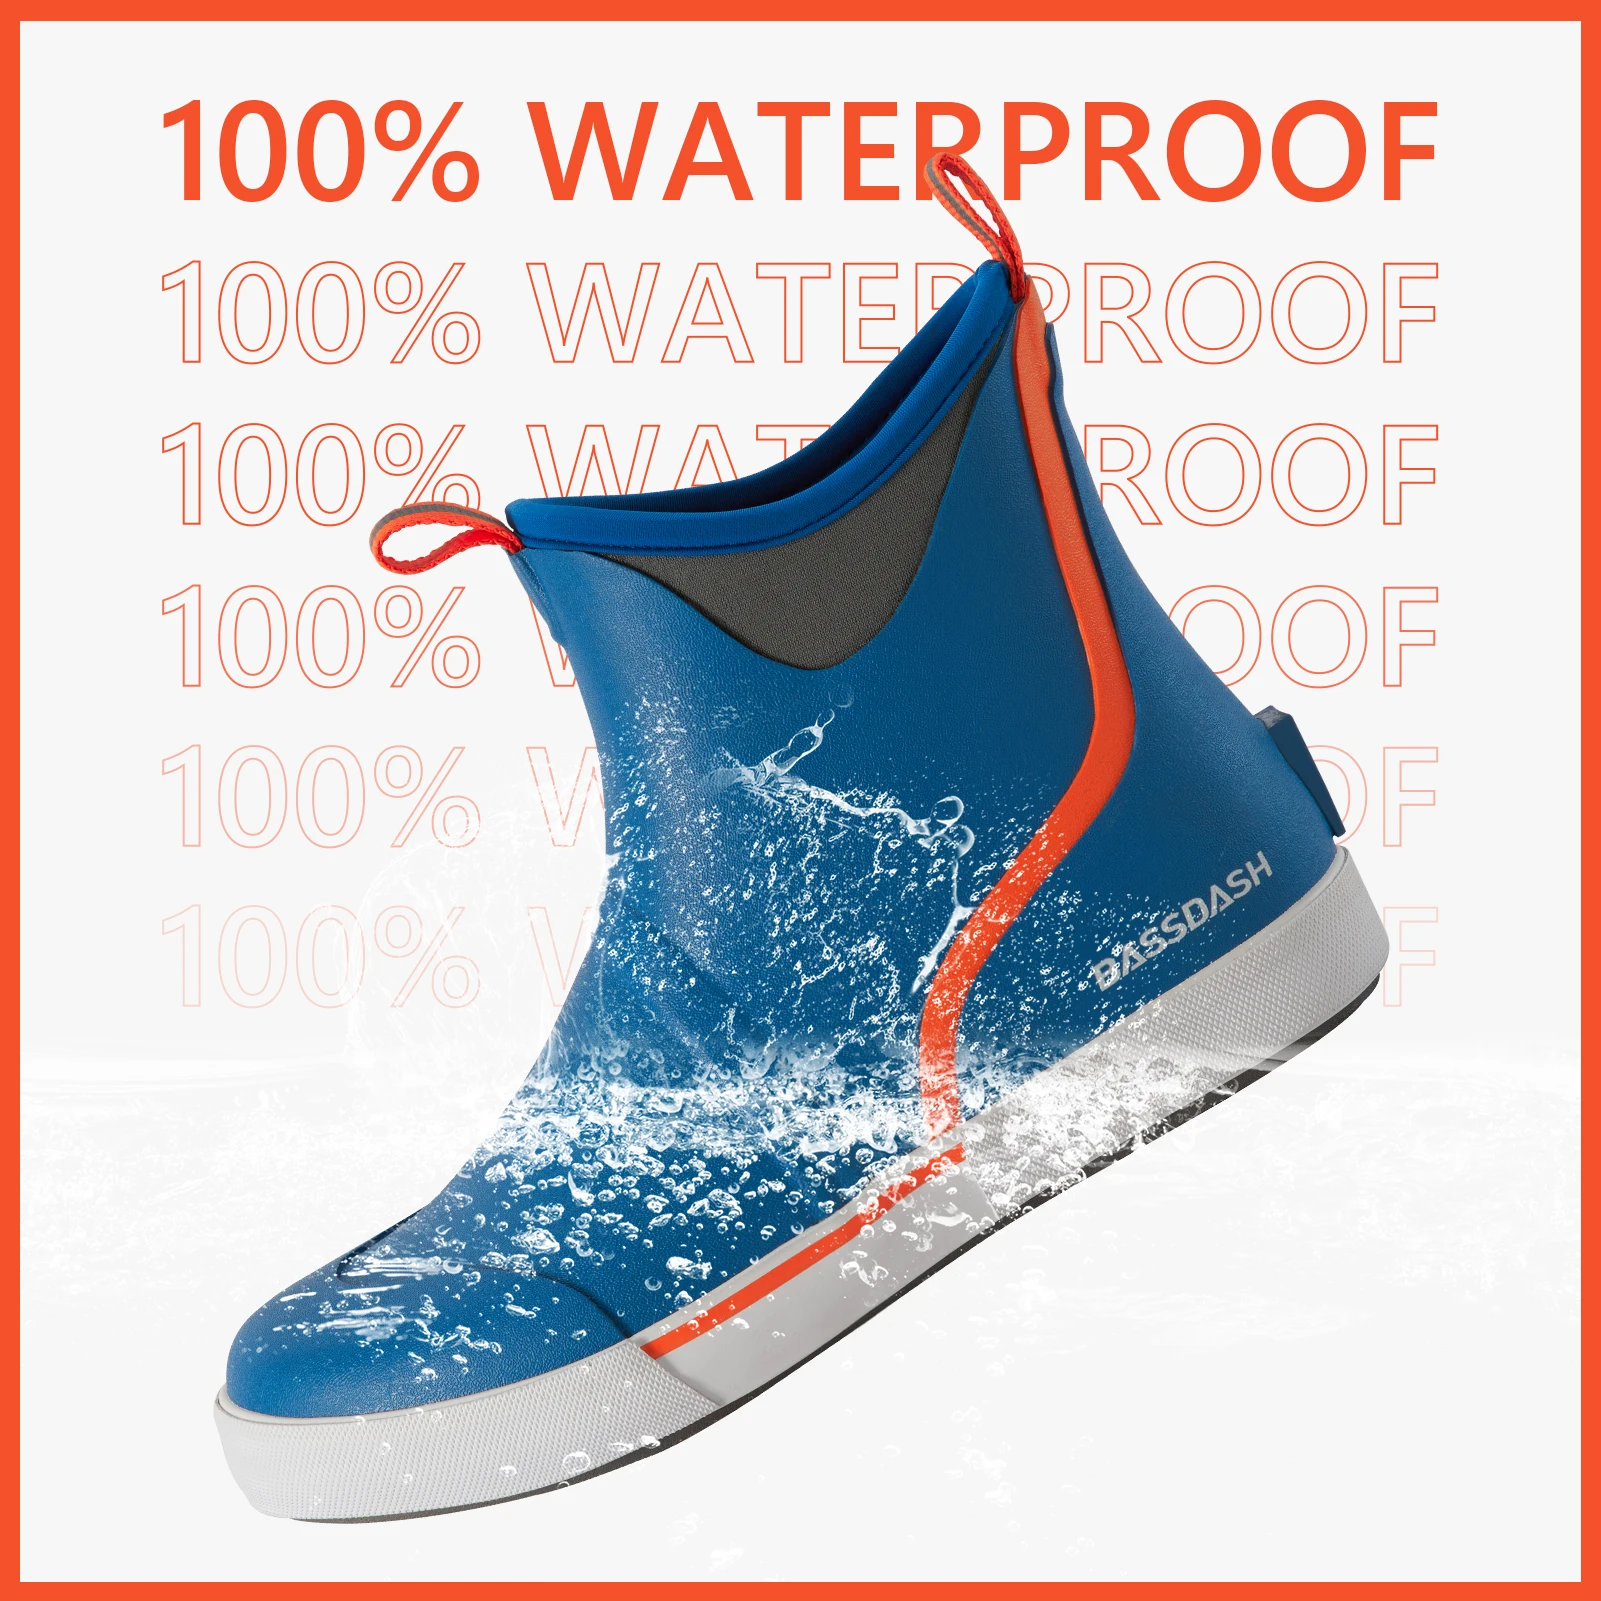 https://ae01.alicdn.com/kf/S7353944561364ef4a7b369d898c4d35fW/BASSDASH-Men-s-6-Waterproof-Deck-Boots-with-Breathable-Lining-Anti-slip-Neoprene-Rubber-Ankle-Rain.jpg